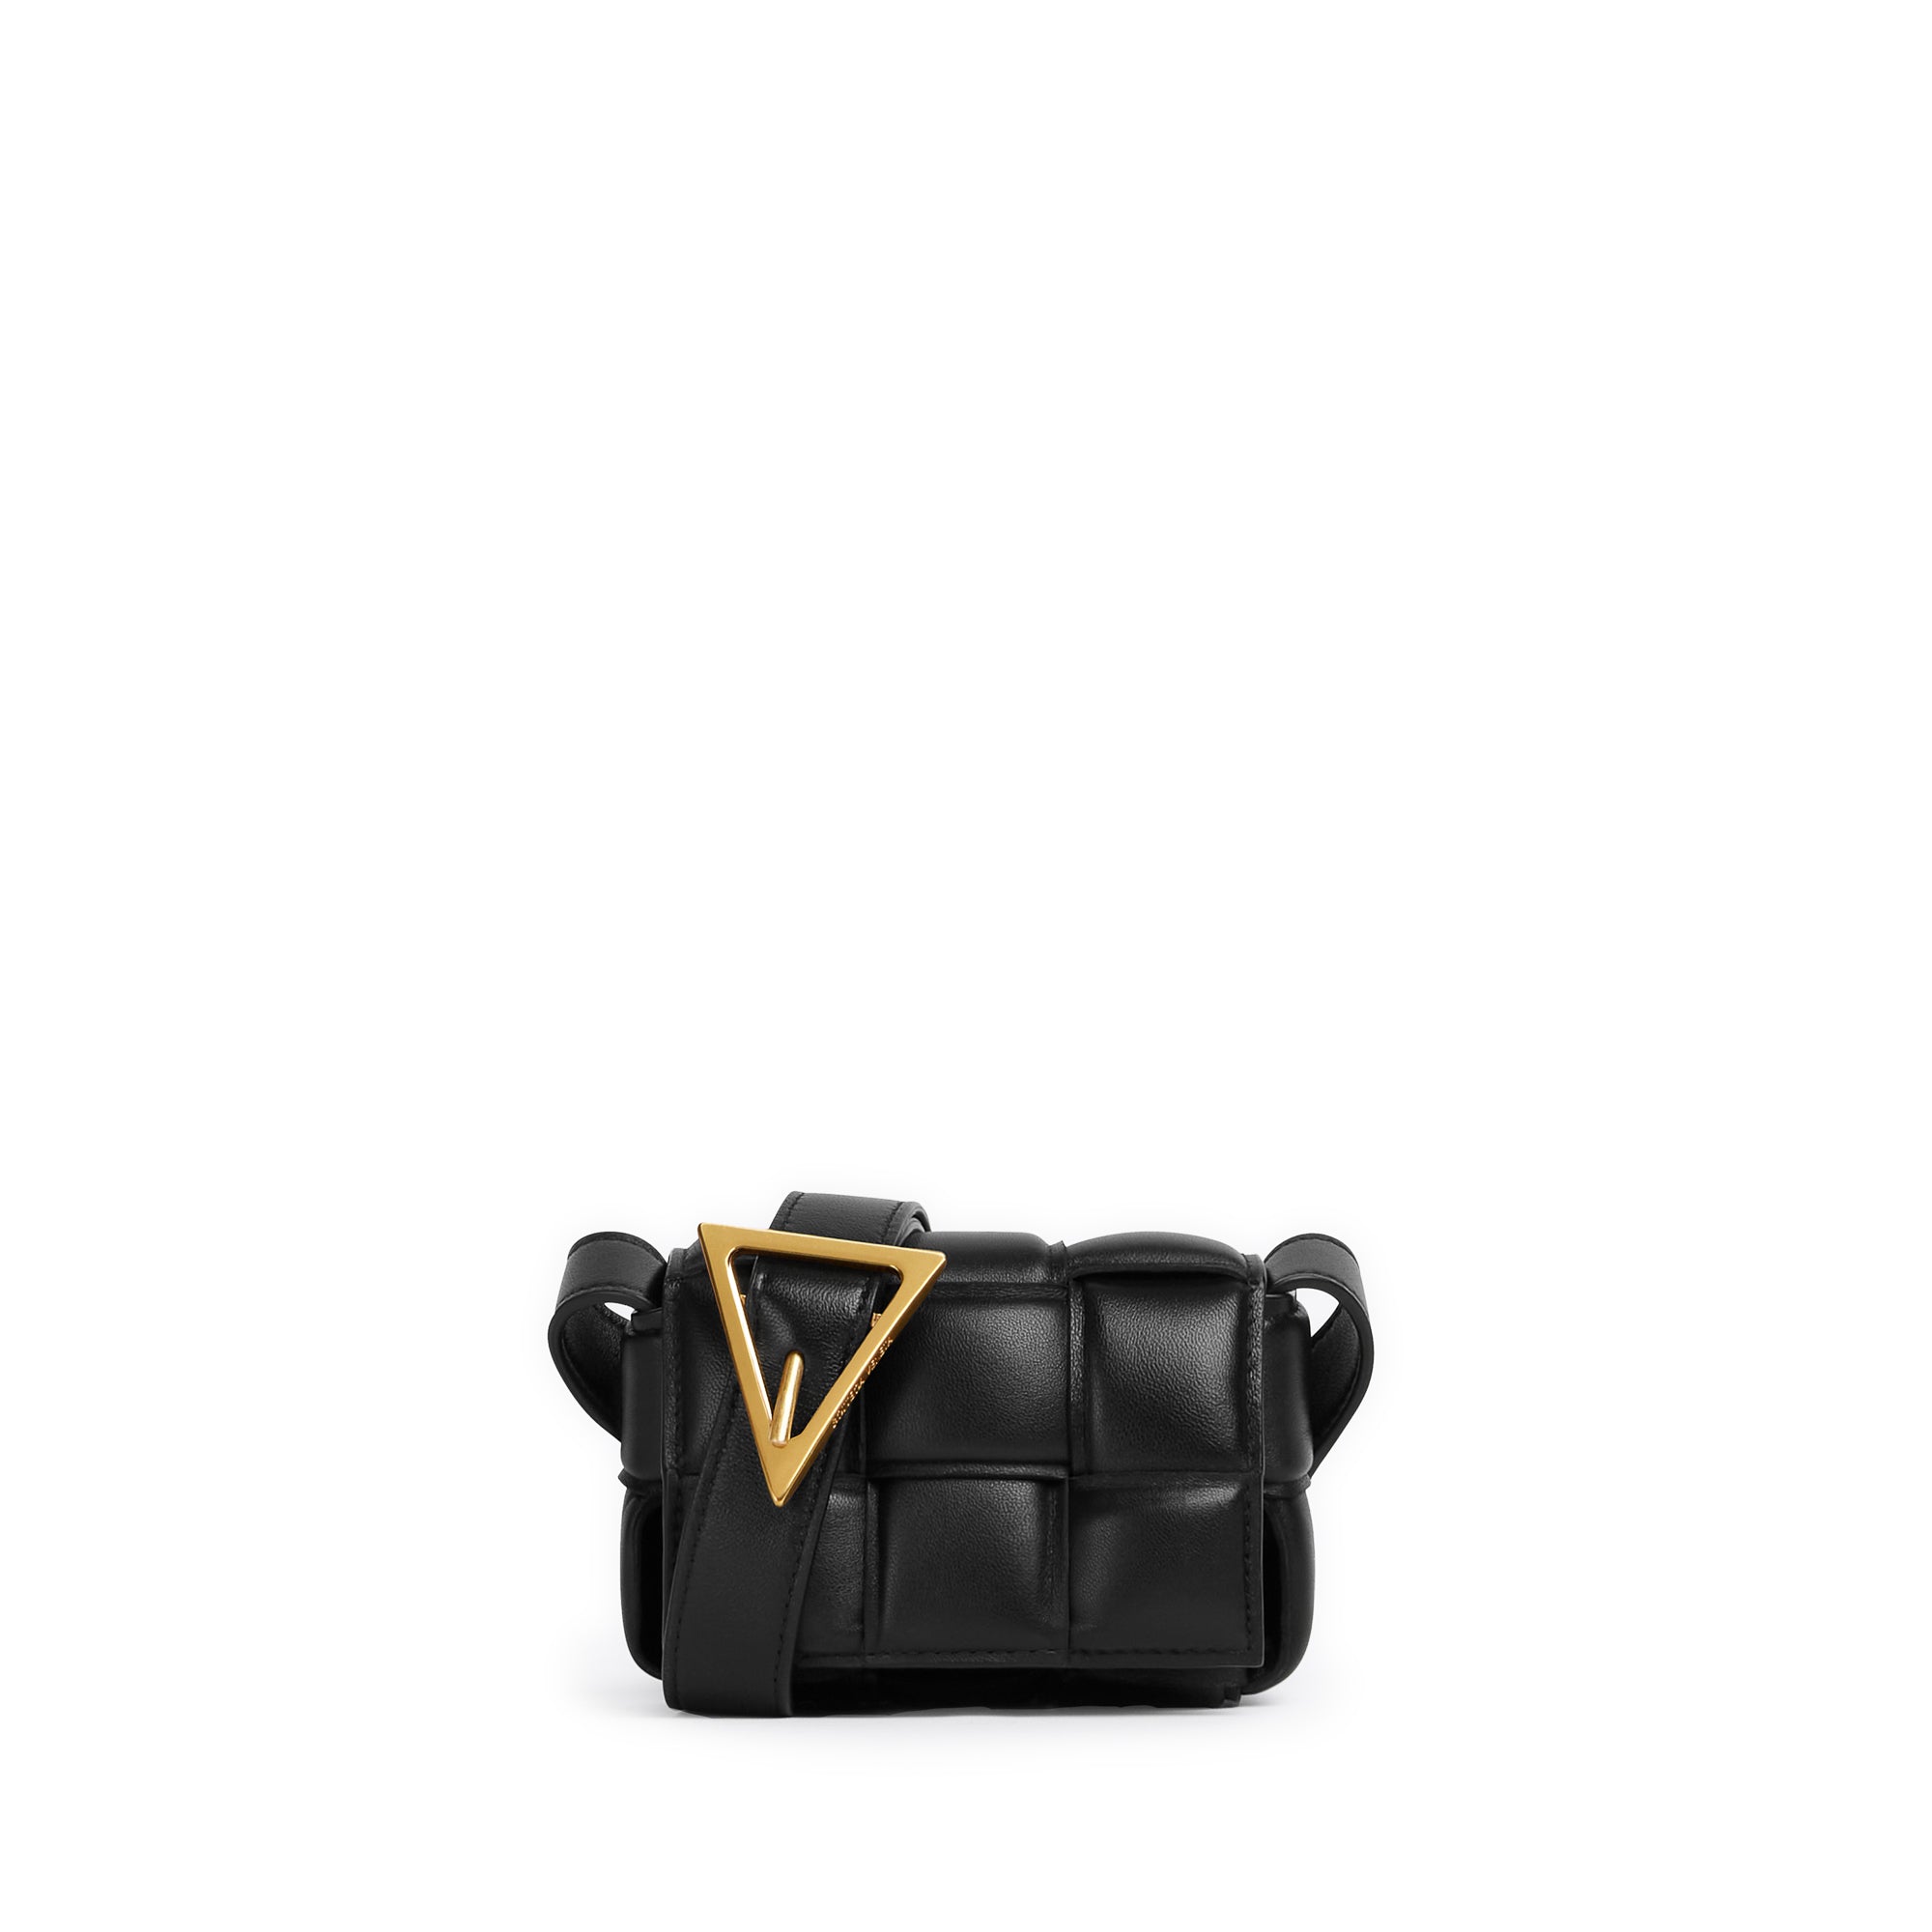 Bottega Veneta® Small Cassette für Damen in Black. Shop online now.